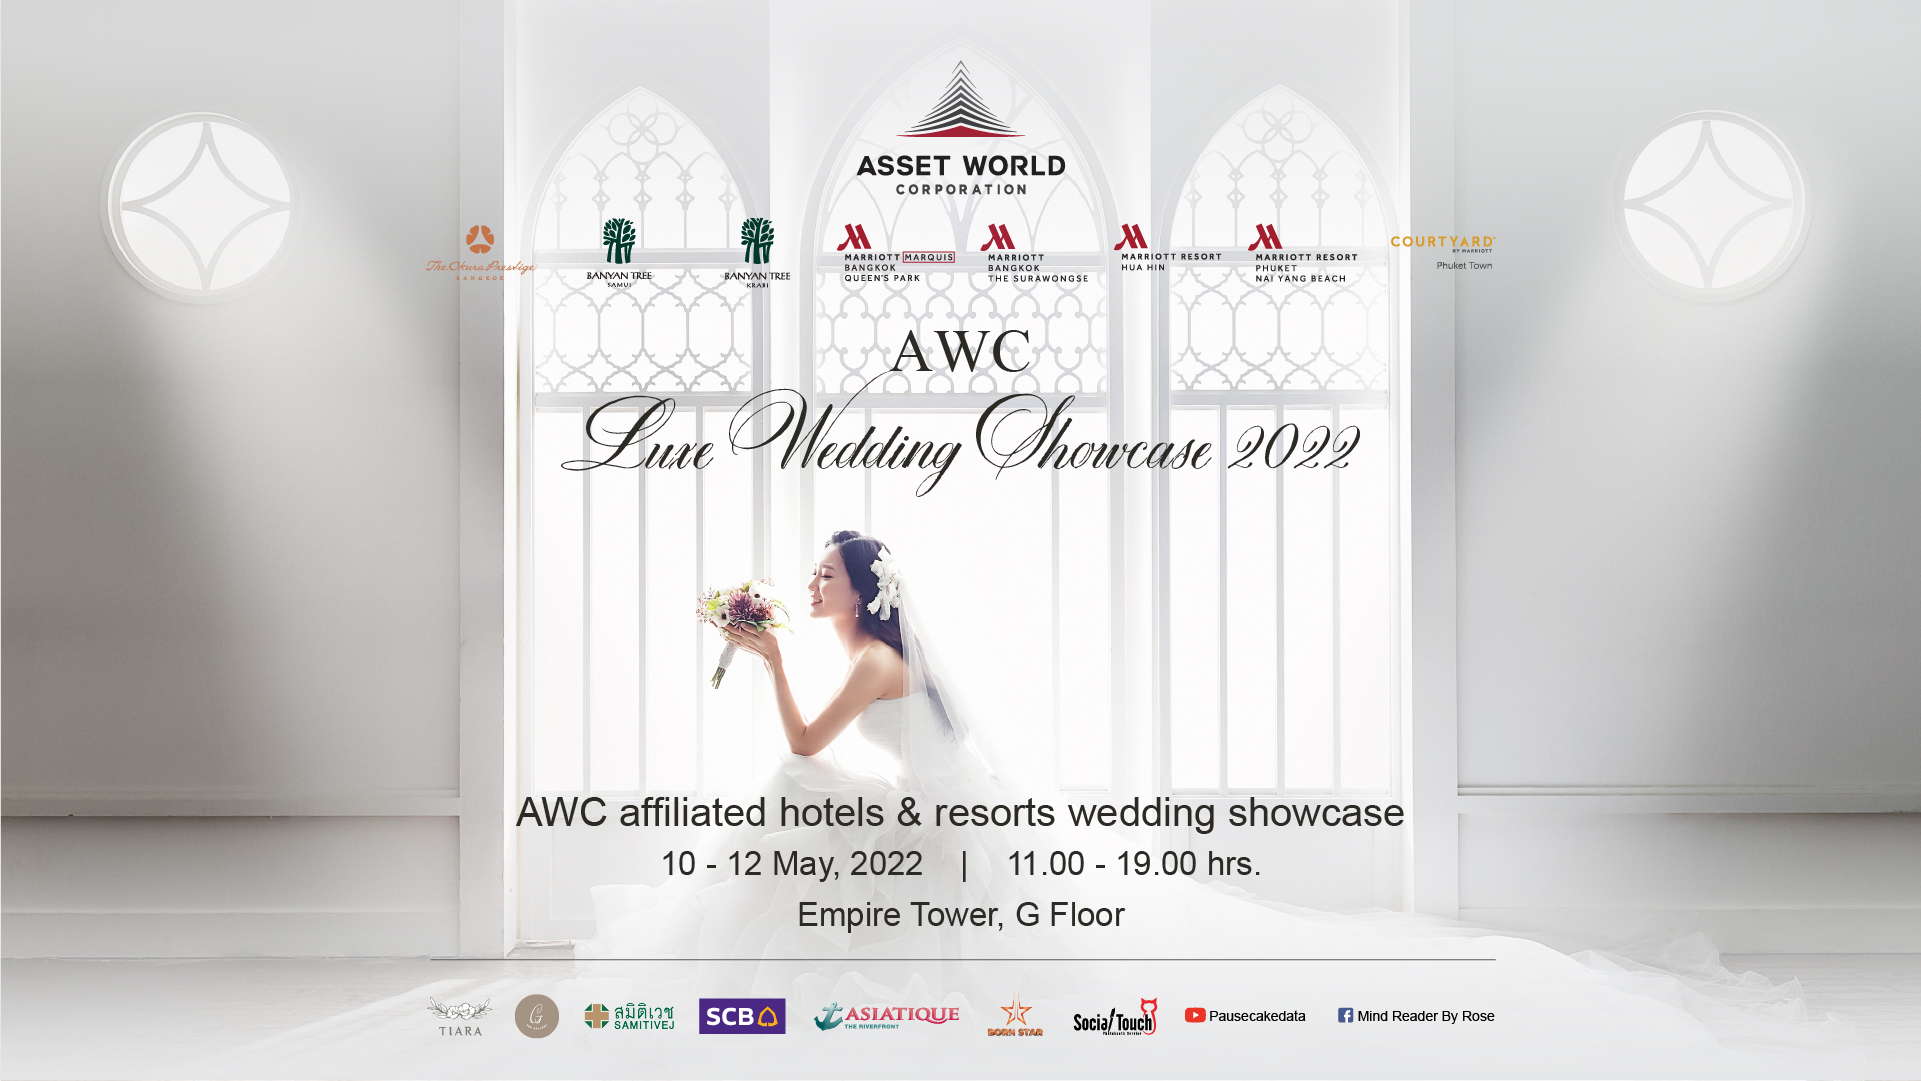 AWC AWC Luxe Wedding Showcase 2022